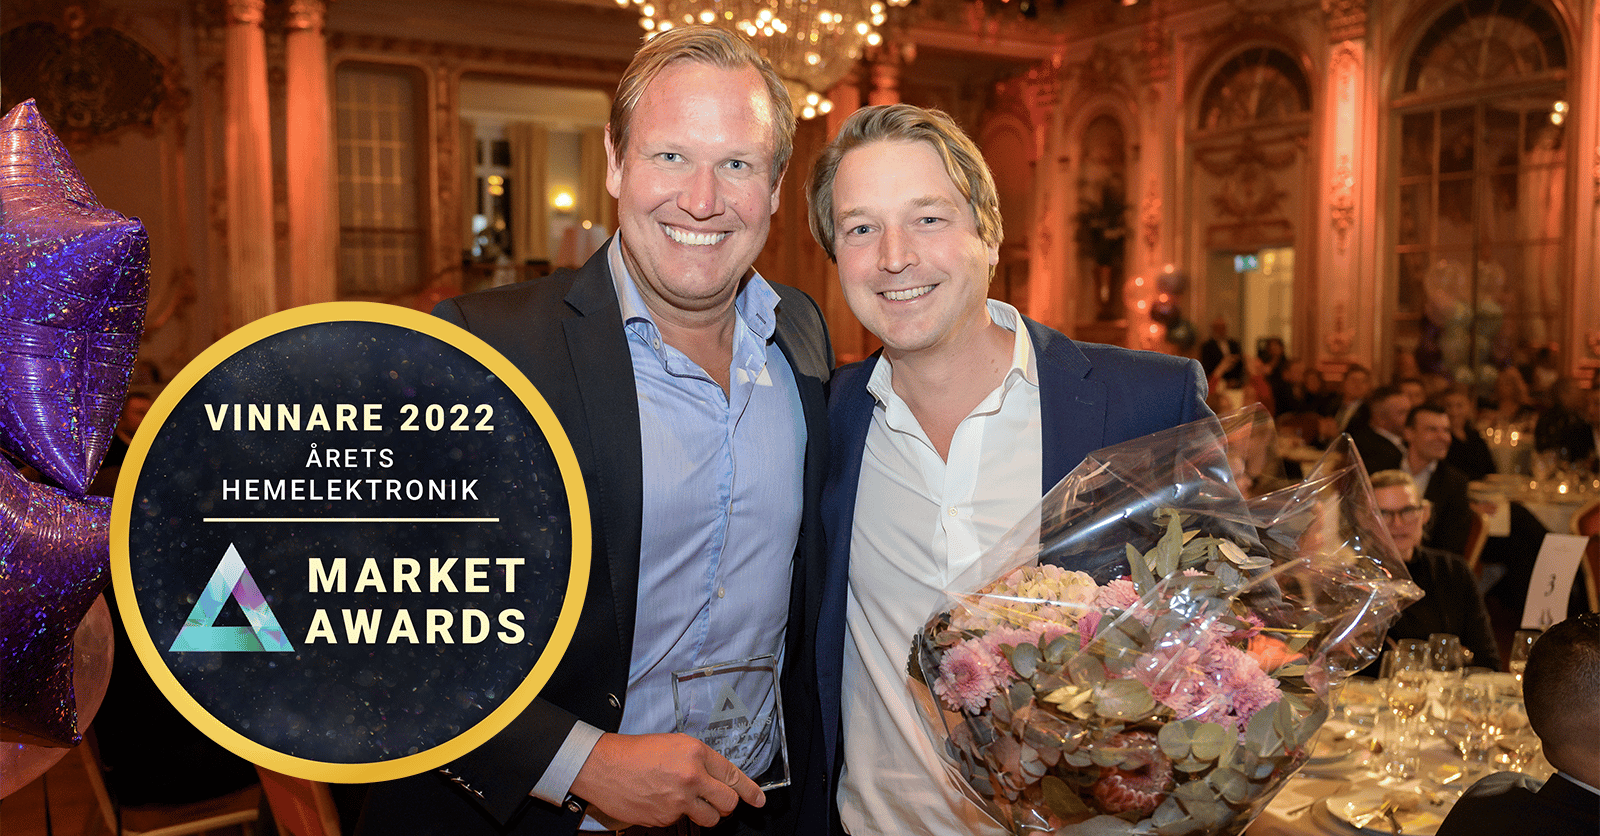 Market Awards 2022